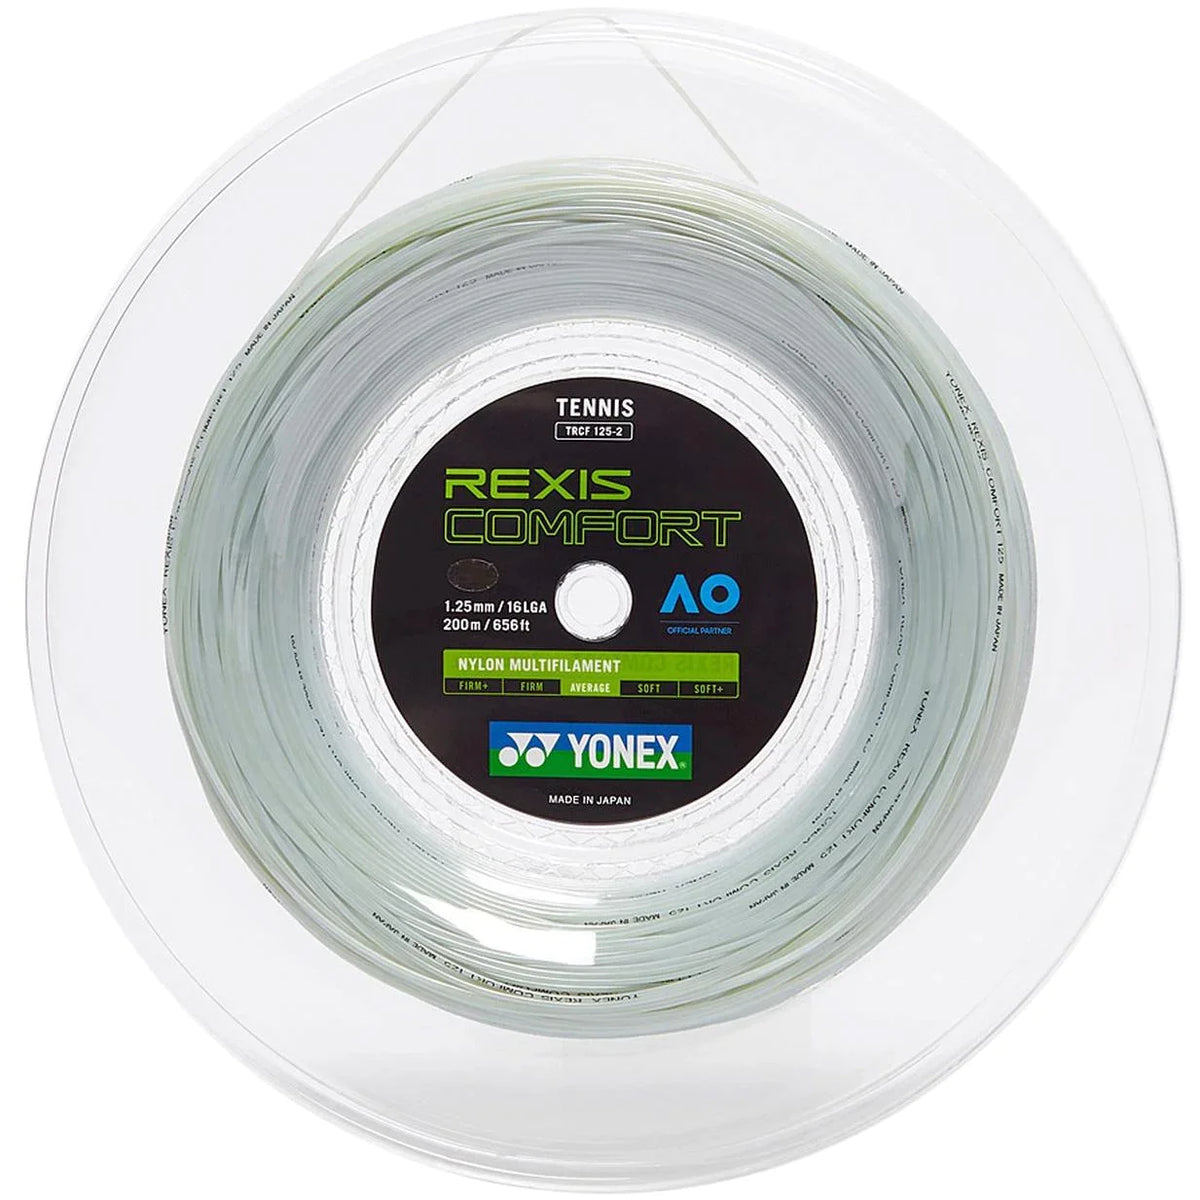 Yonex Rexis Comfort 1.25mm 200m Reel Tennis String Cool White